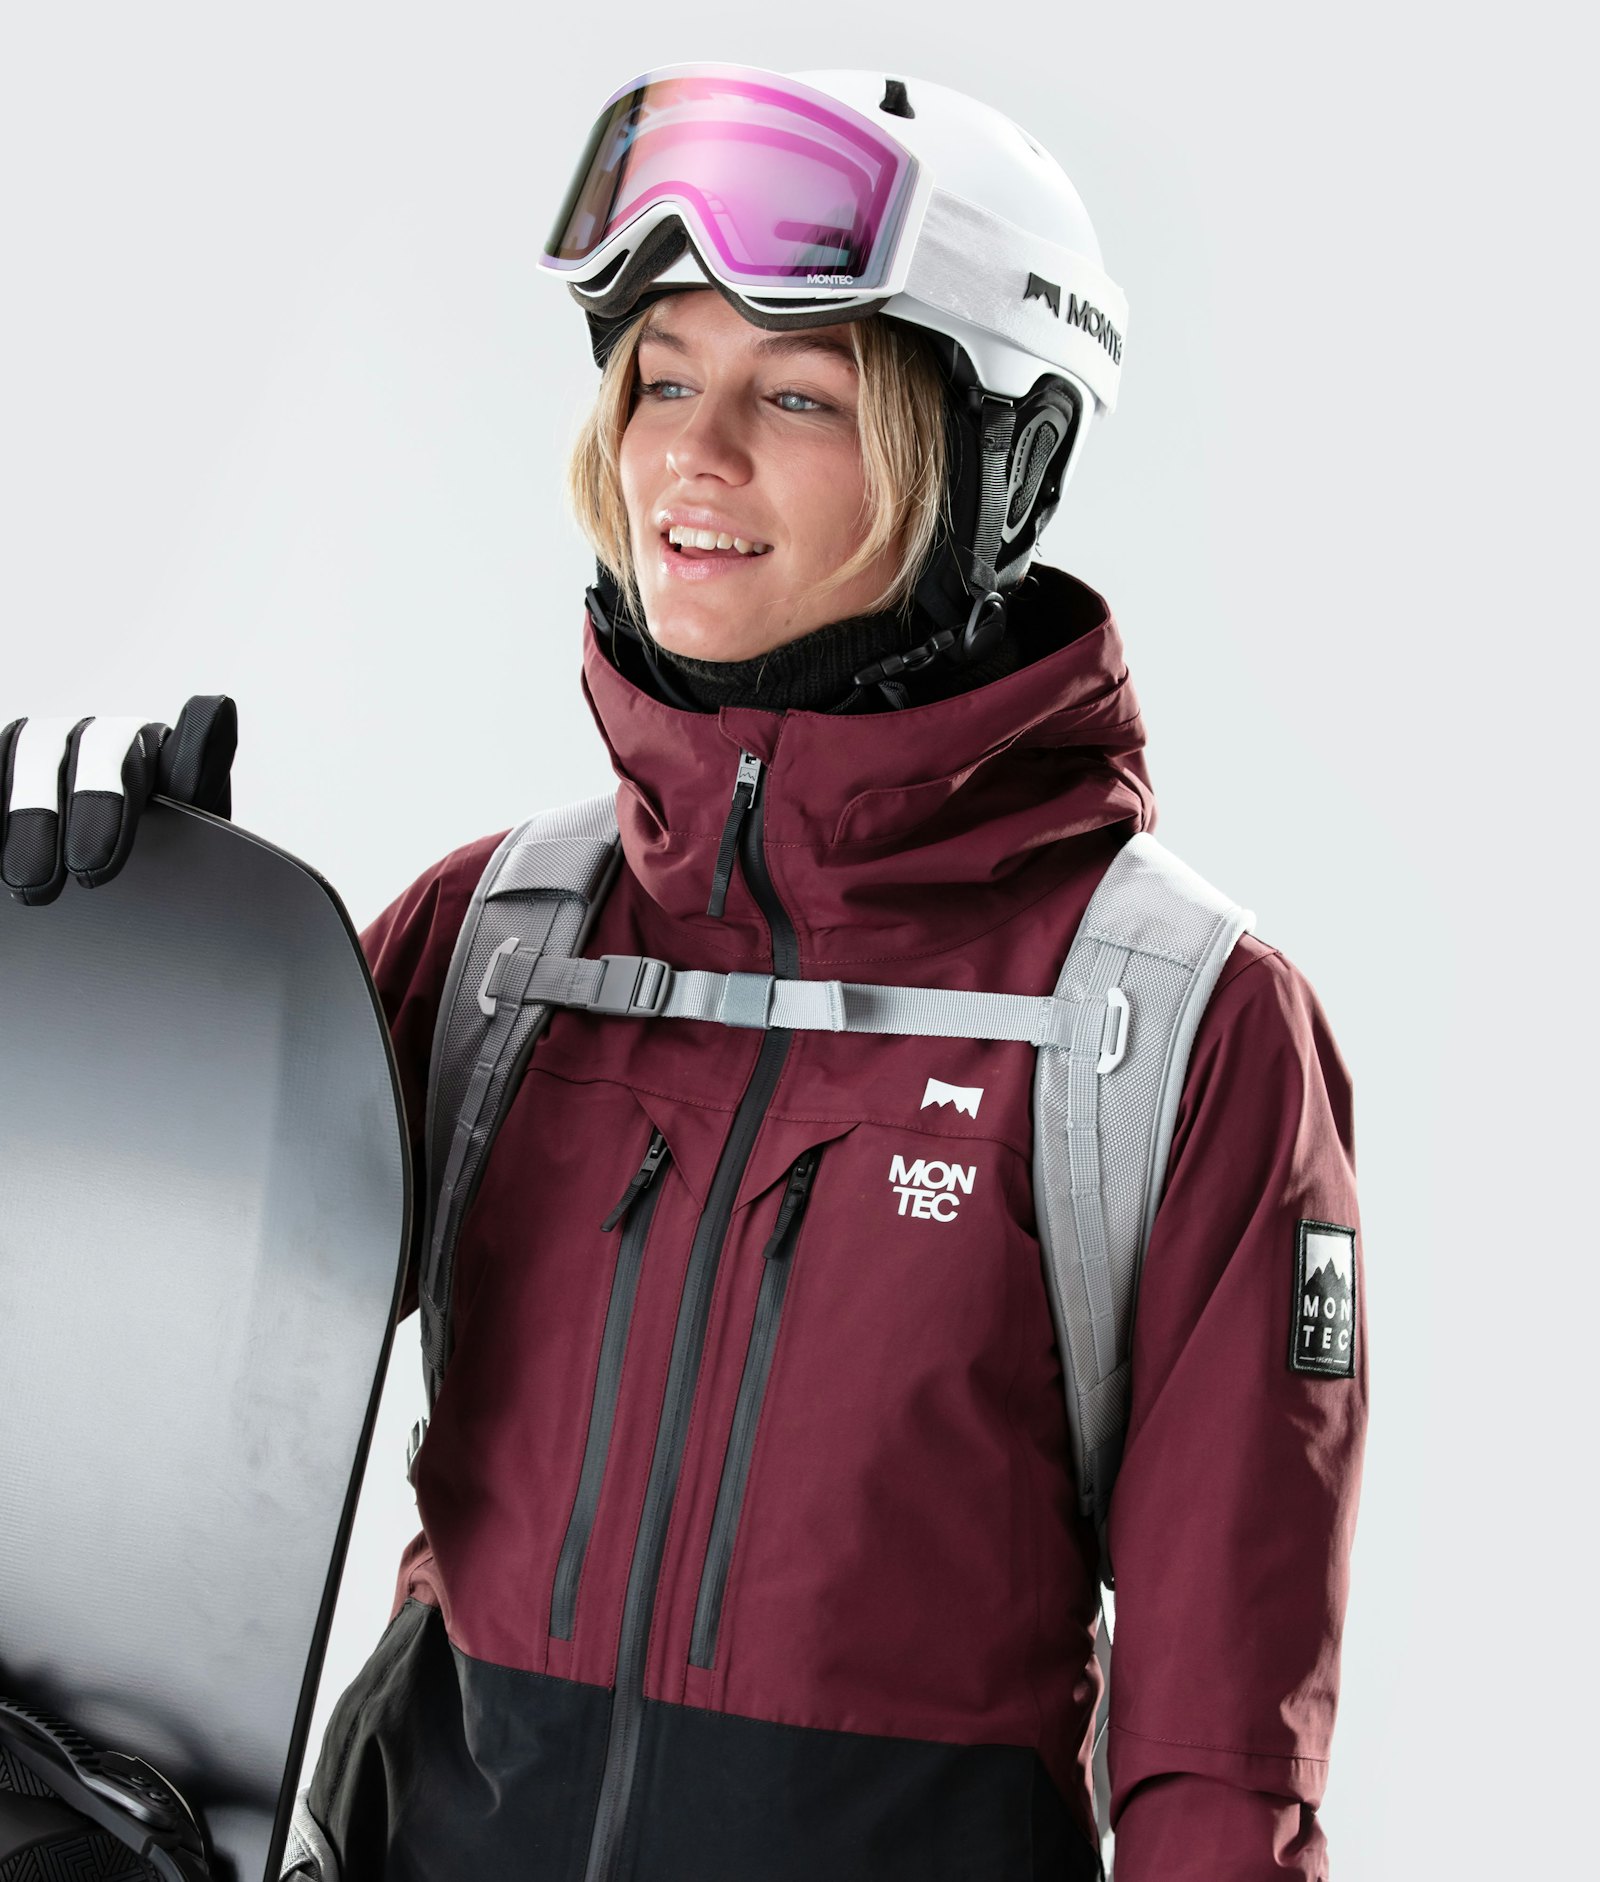 Montec Moss W 2020 Snowboardjakke Dame Burgundy/Black